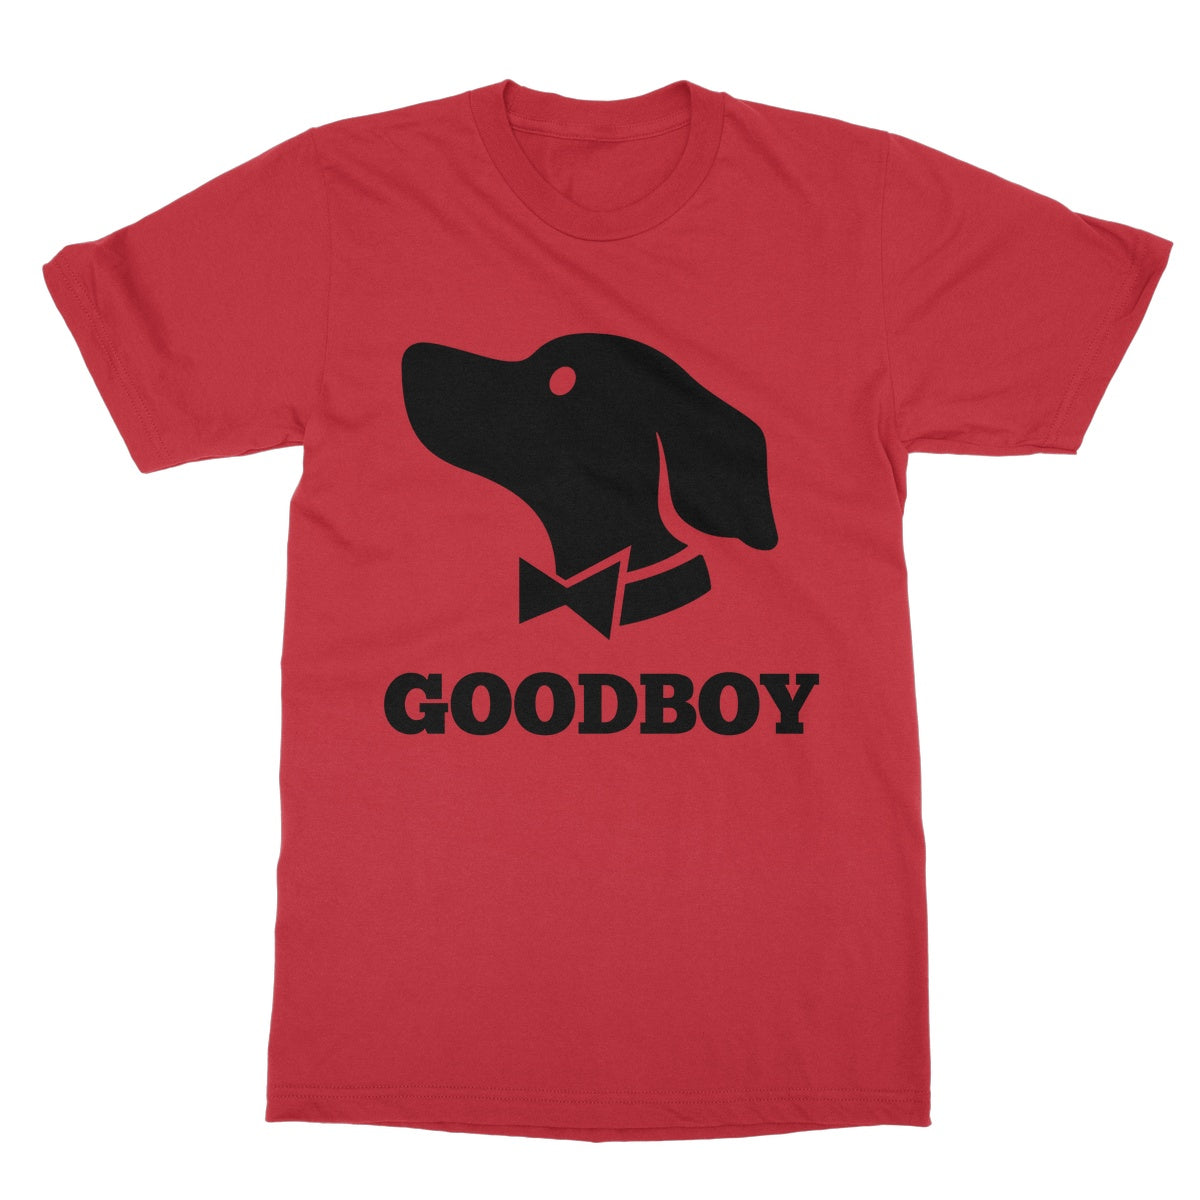 goodboy t shirt red